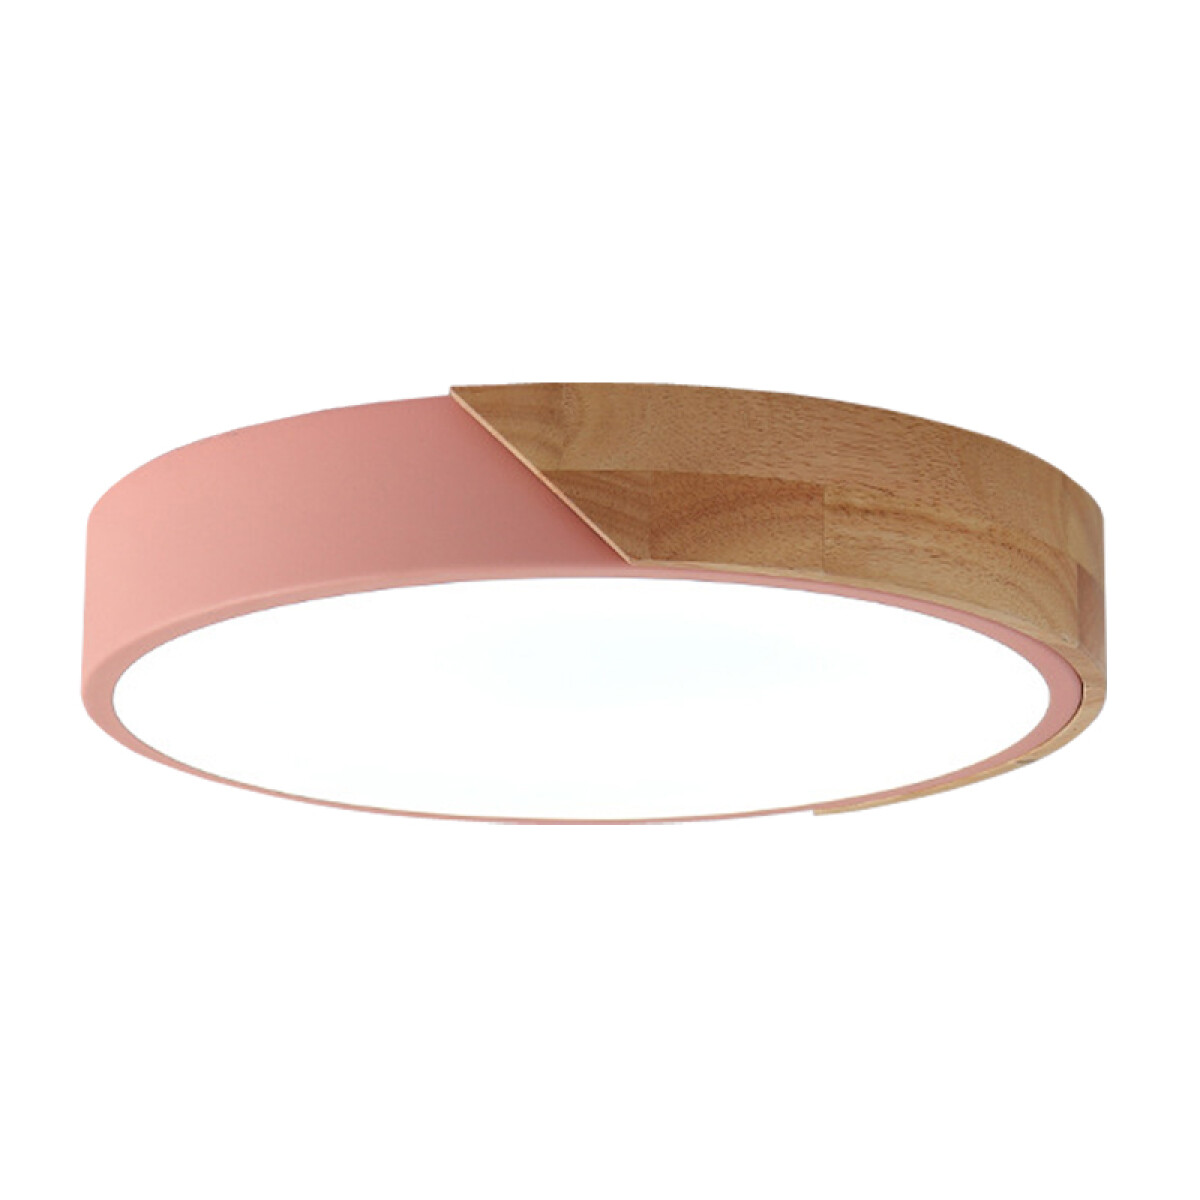 Plafón Led circular en madera y aluminio 30cm - Rosa 